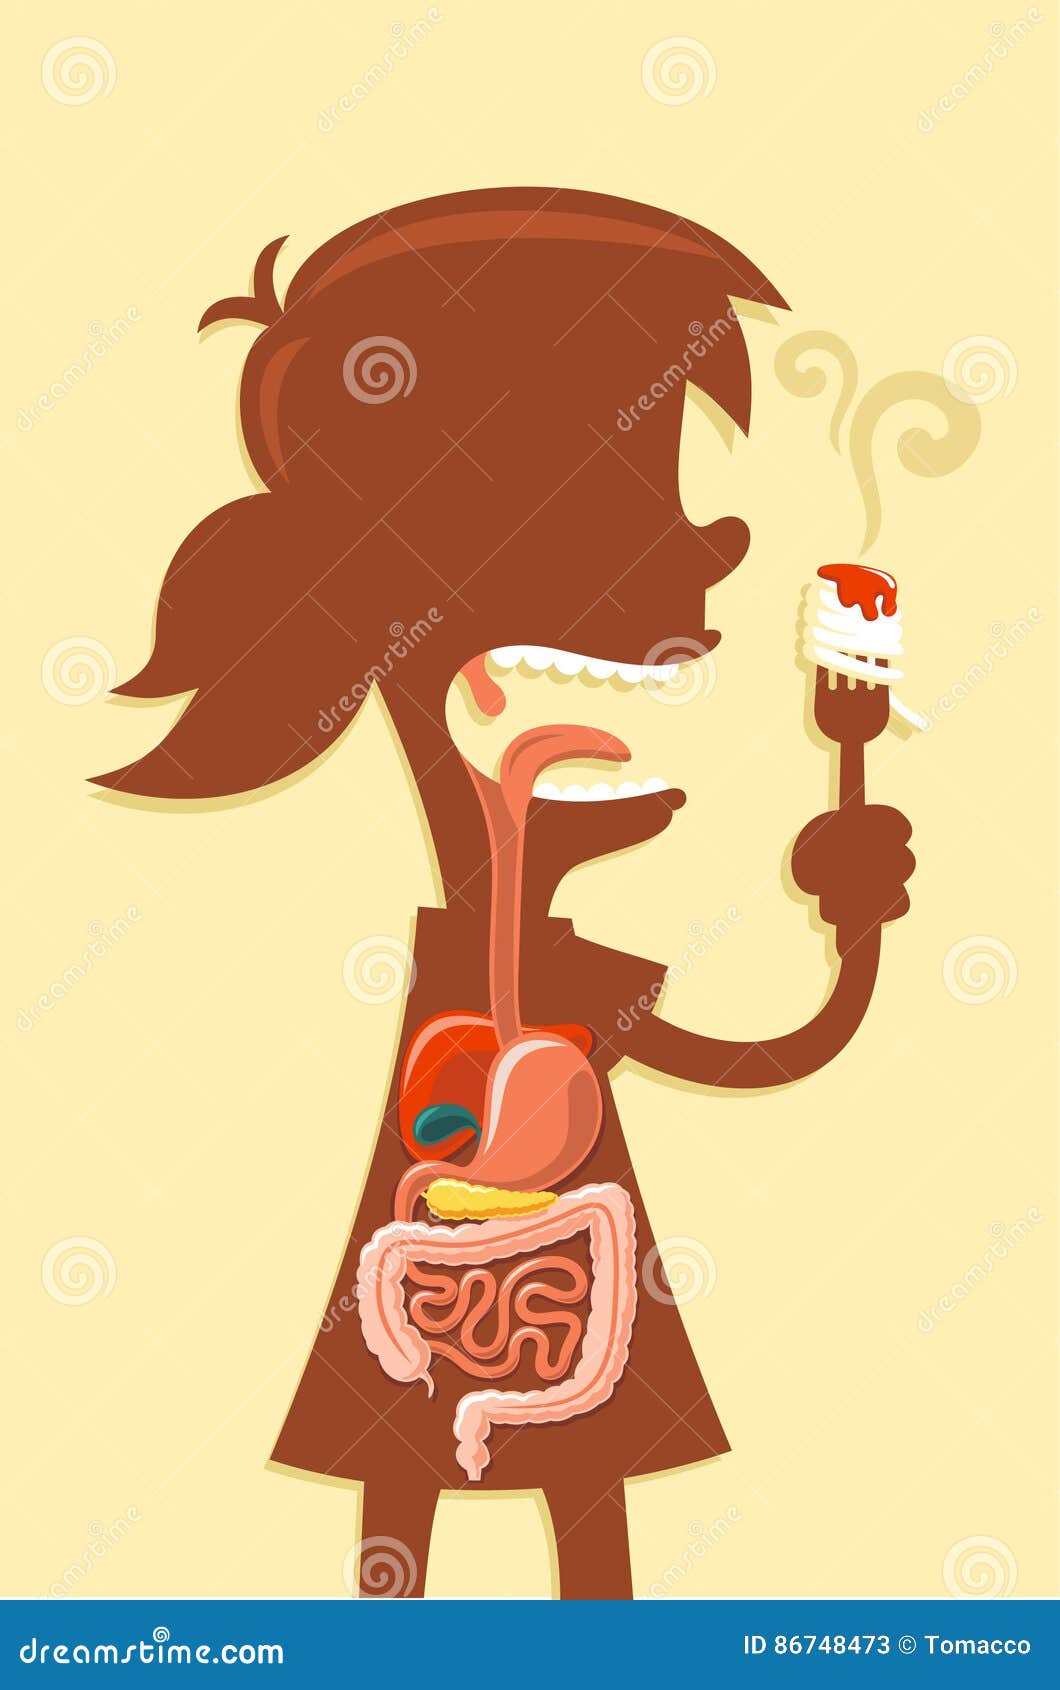 Digestive system of a girl stock illustration. Illustration of head